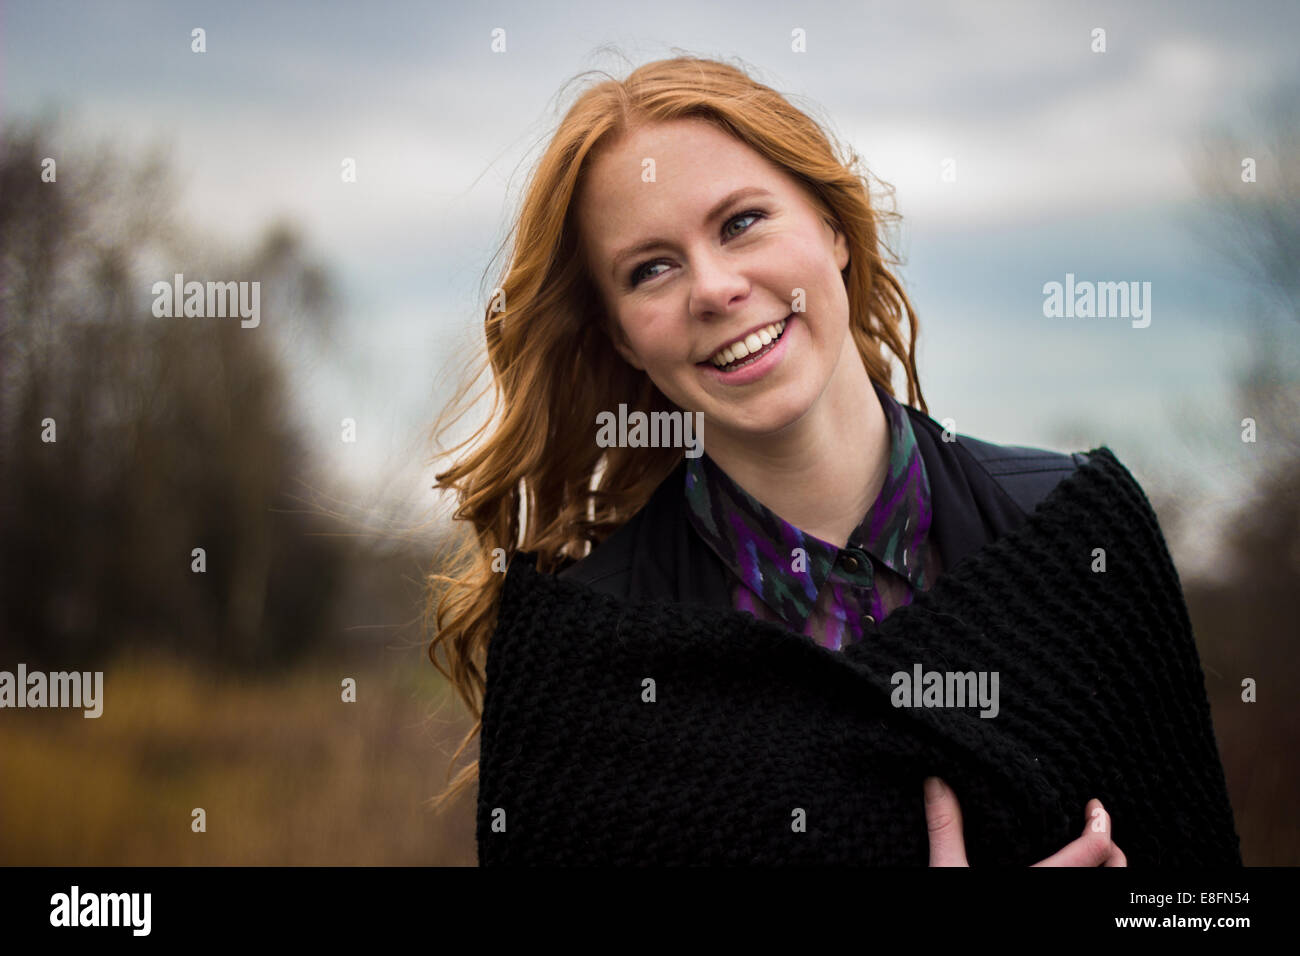 Portrait of a smiling woman outdoors Banque D'Images